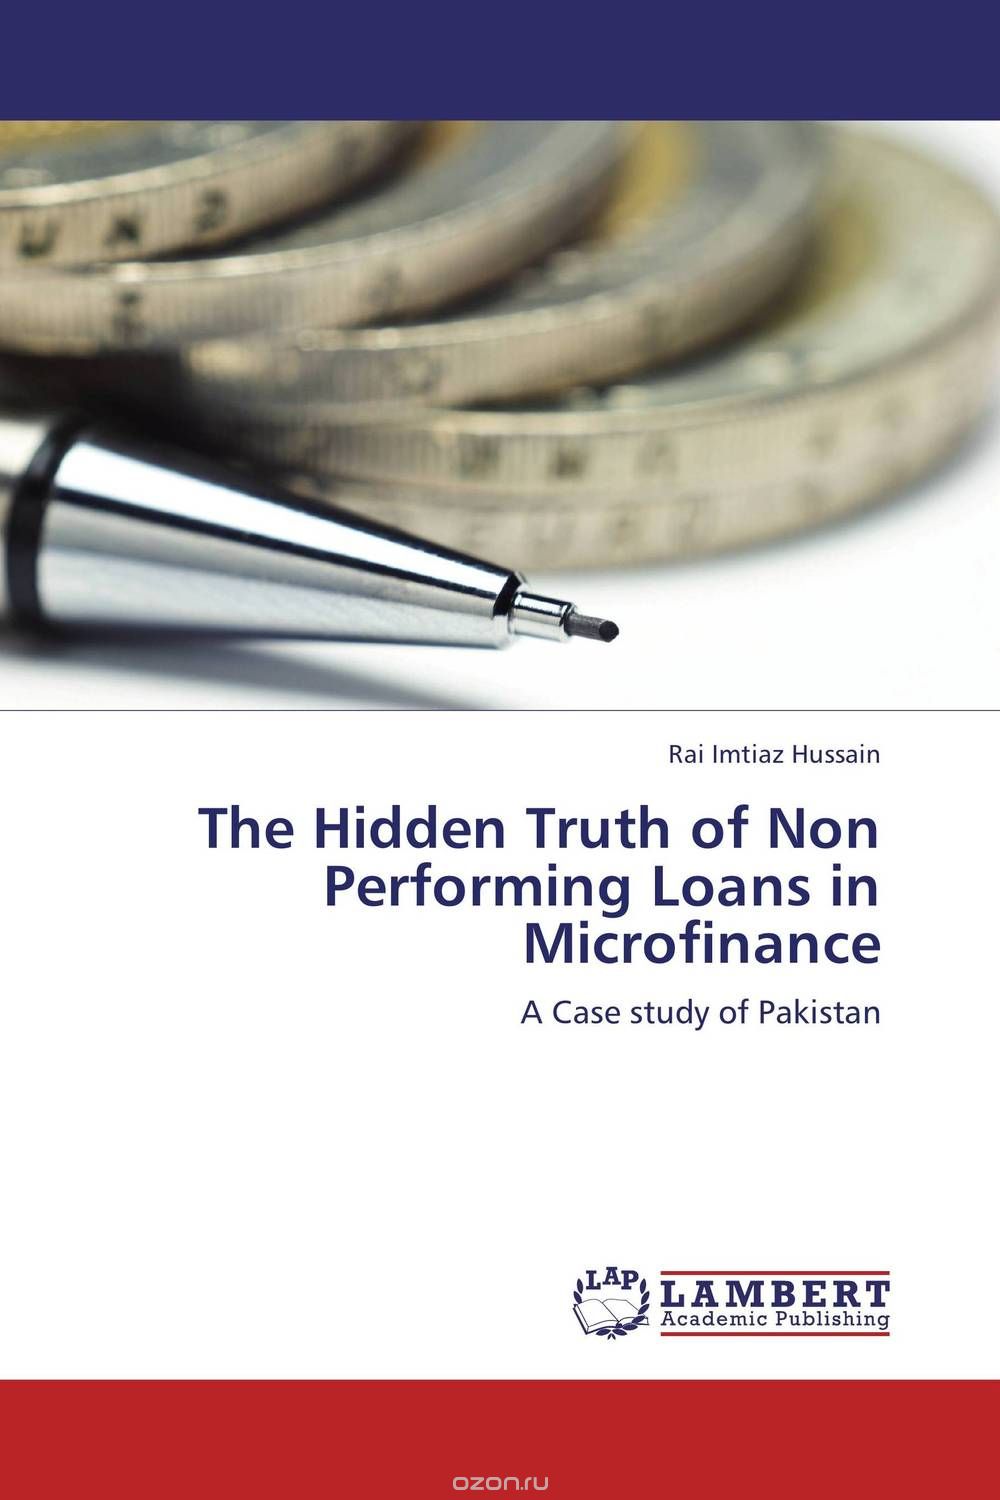 Скачать книгу "The Hidden Truth of Non Performing Loans in Microfinance"